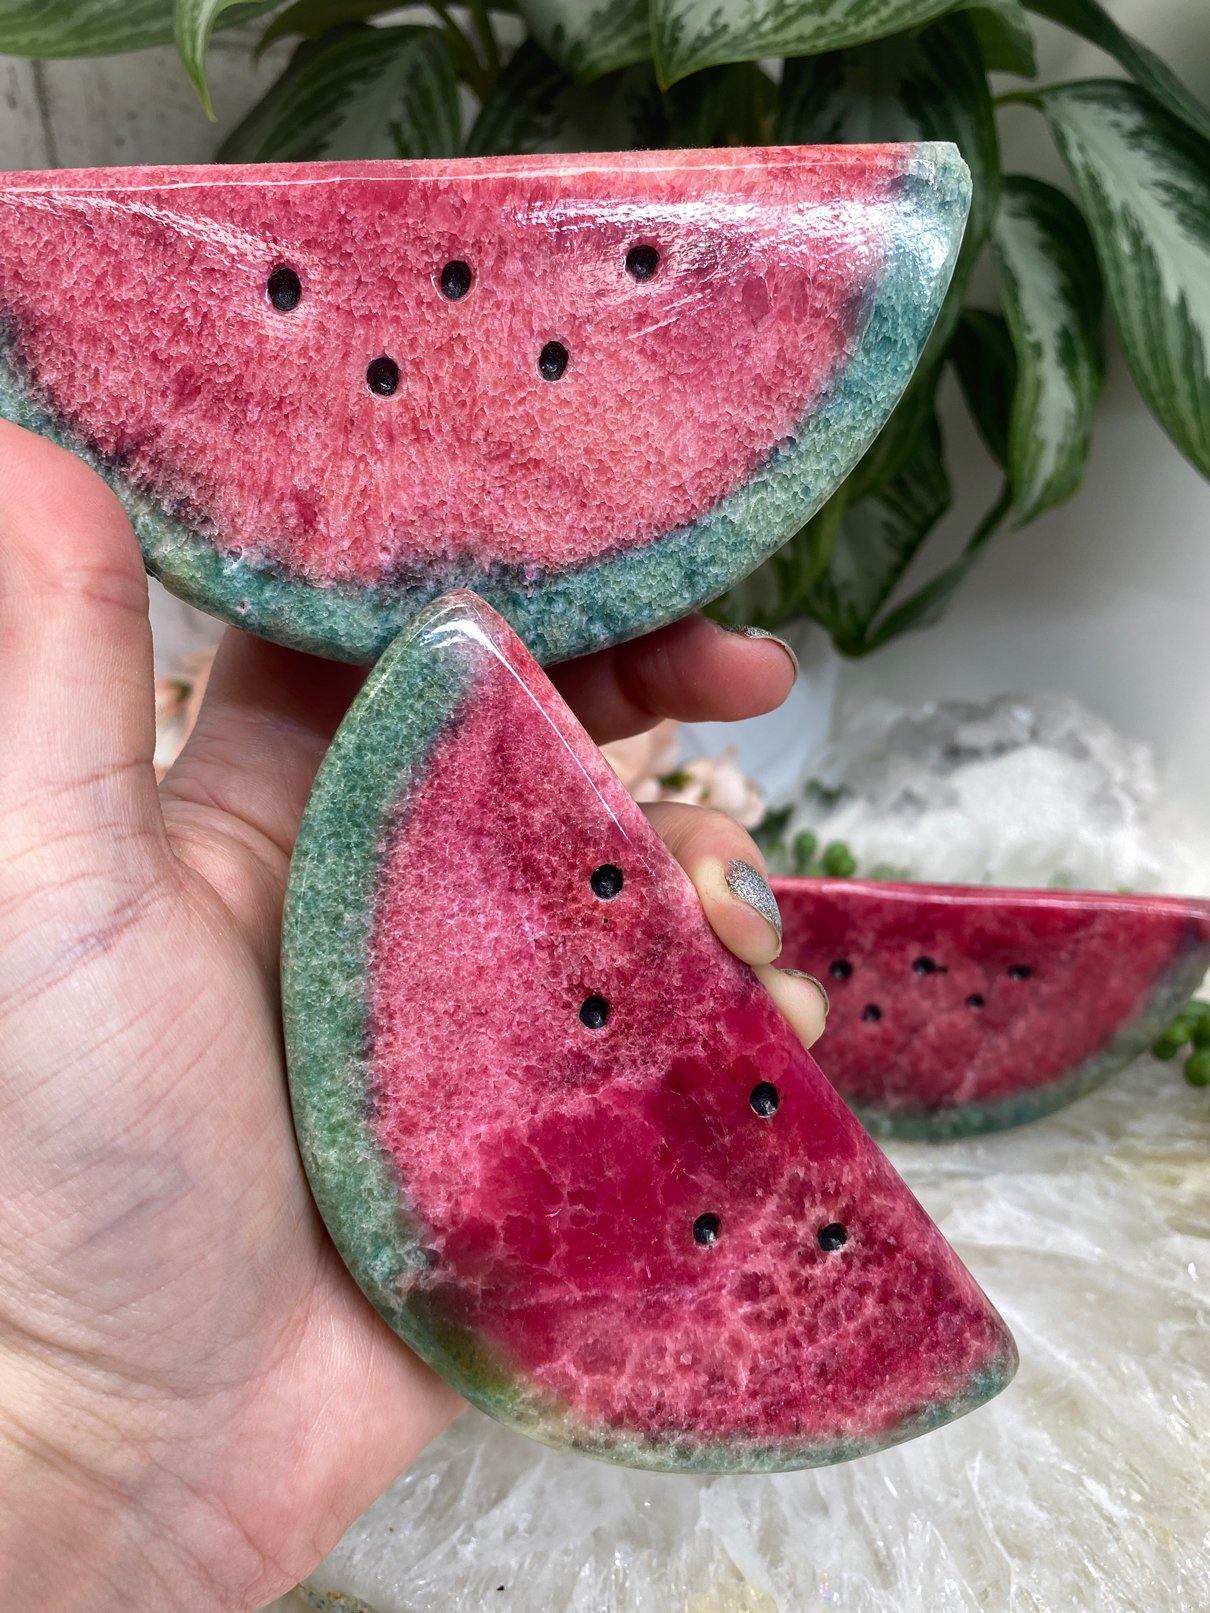    Mexico-Onyx-Crystal-Watermelon-Slice-Novelty-Crystal